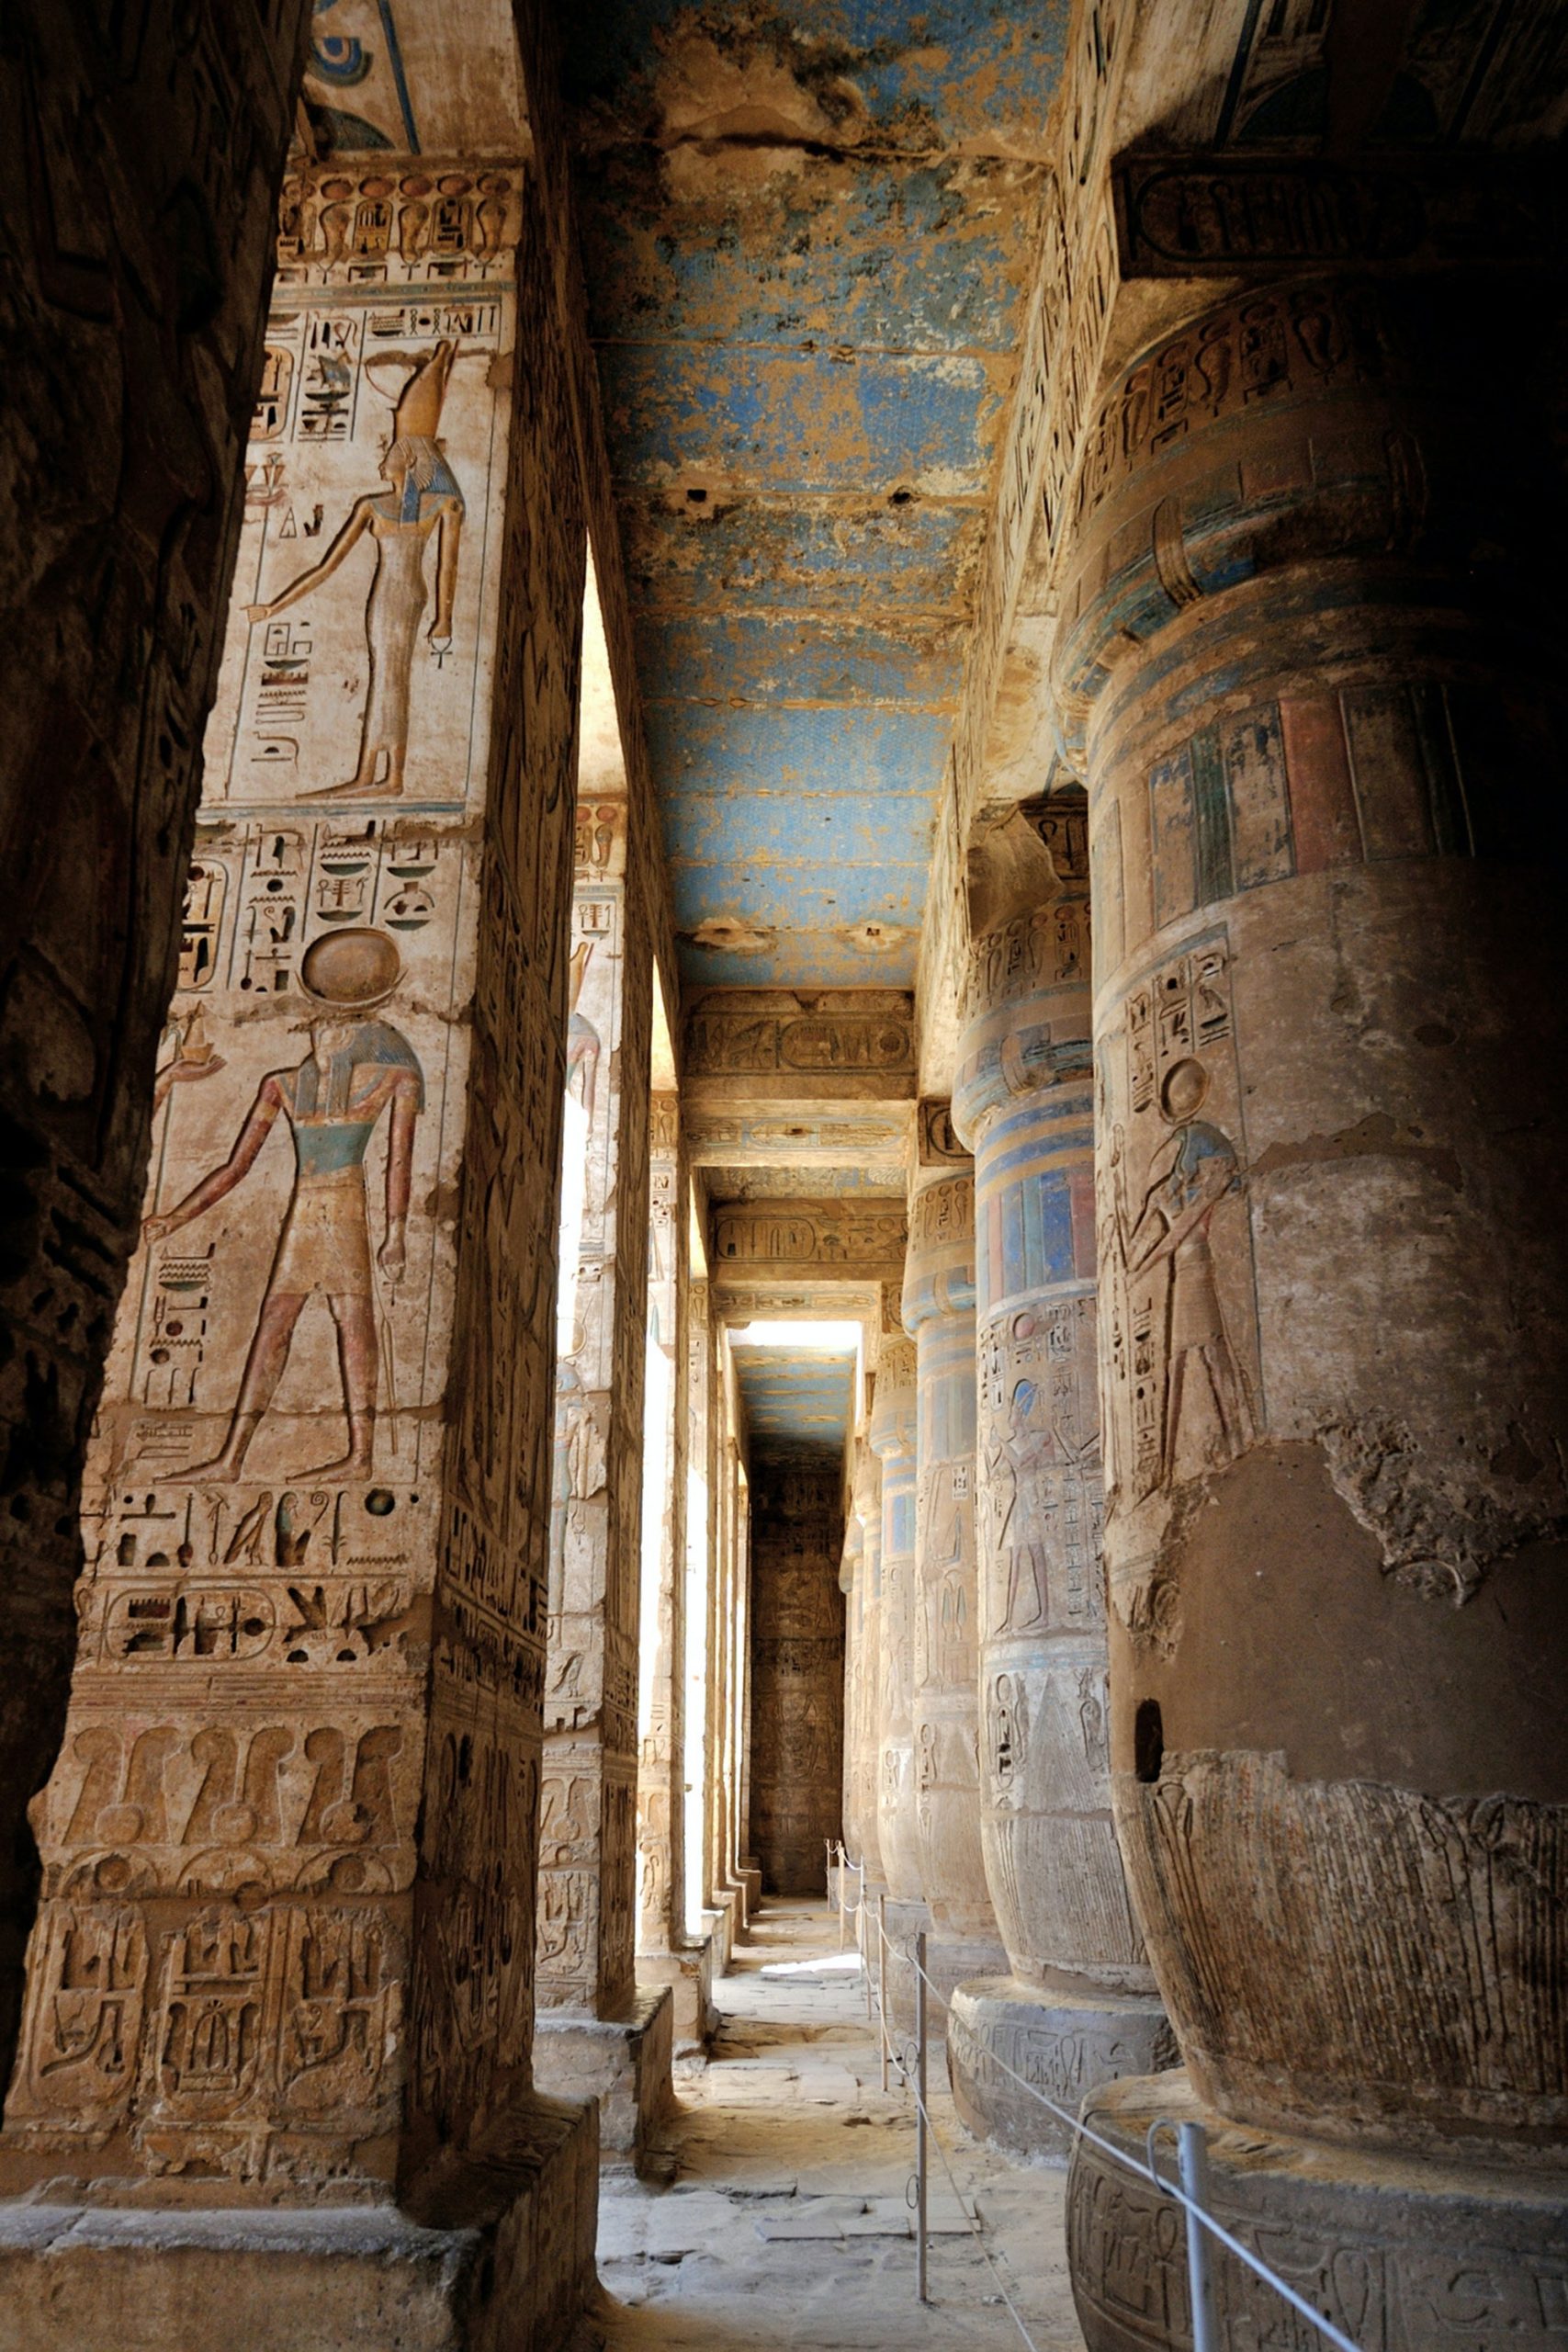 Viaje a Egipto - The Indiana Travel Experiences37